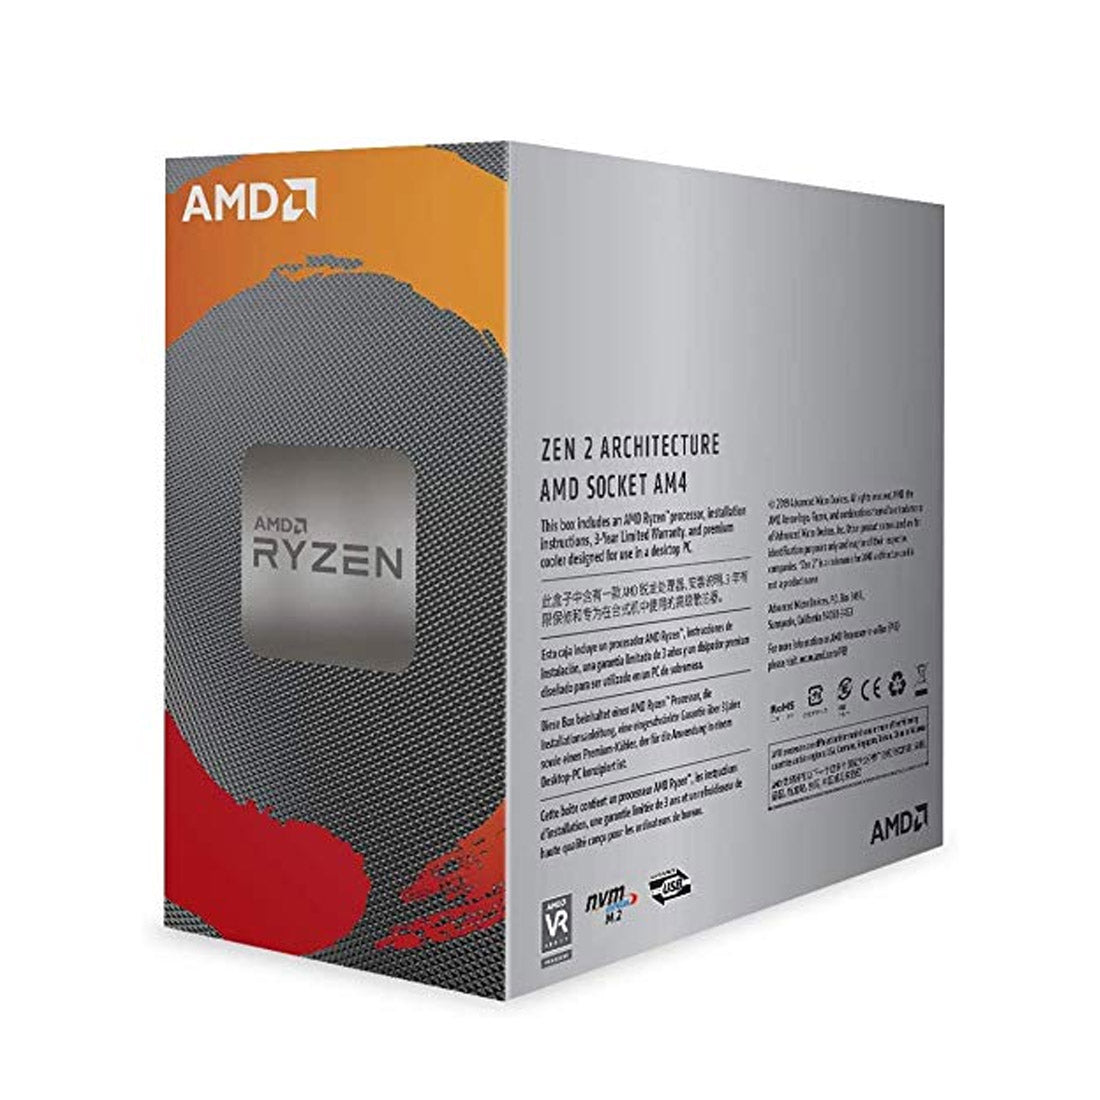 AMD Ryzen 5 3500X डेस्कटॉप प्रोसेसर 6 कोर 4.1GHz तक 35MB कैश AM4 सॉकेट